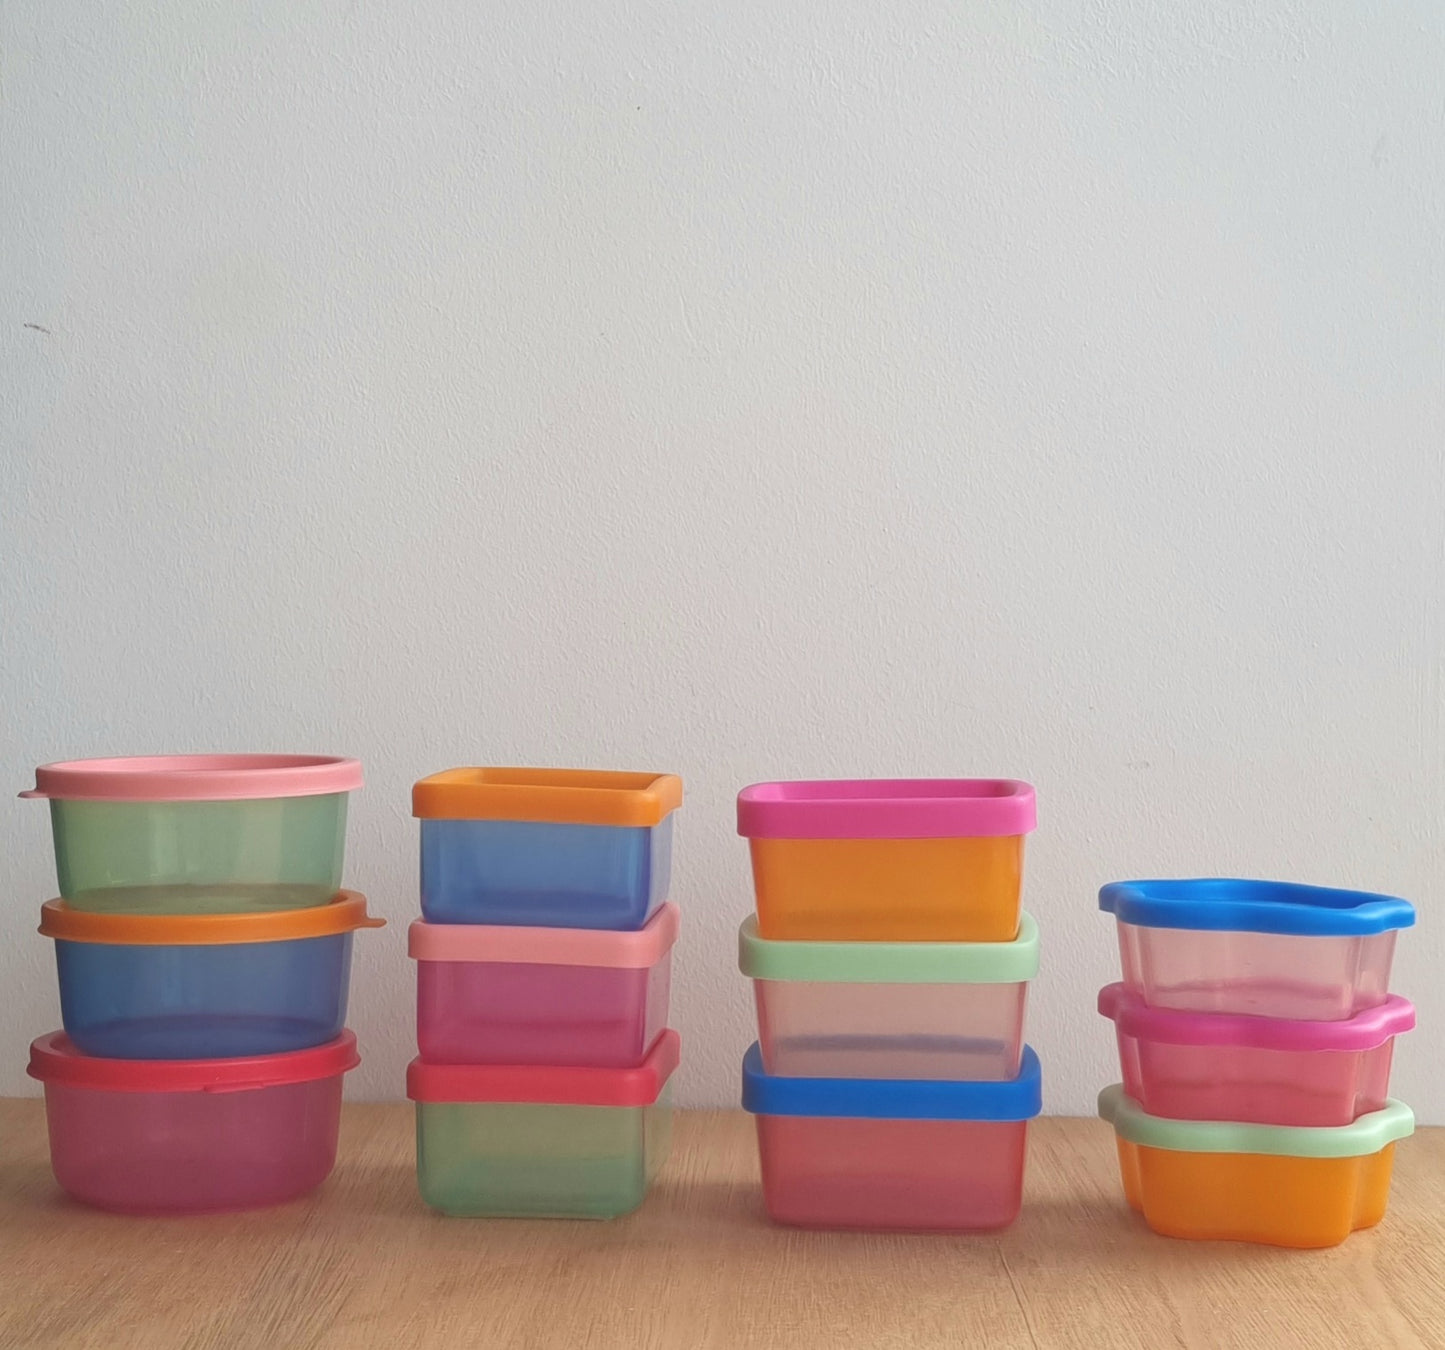 12 mini food boxes